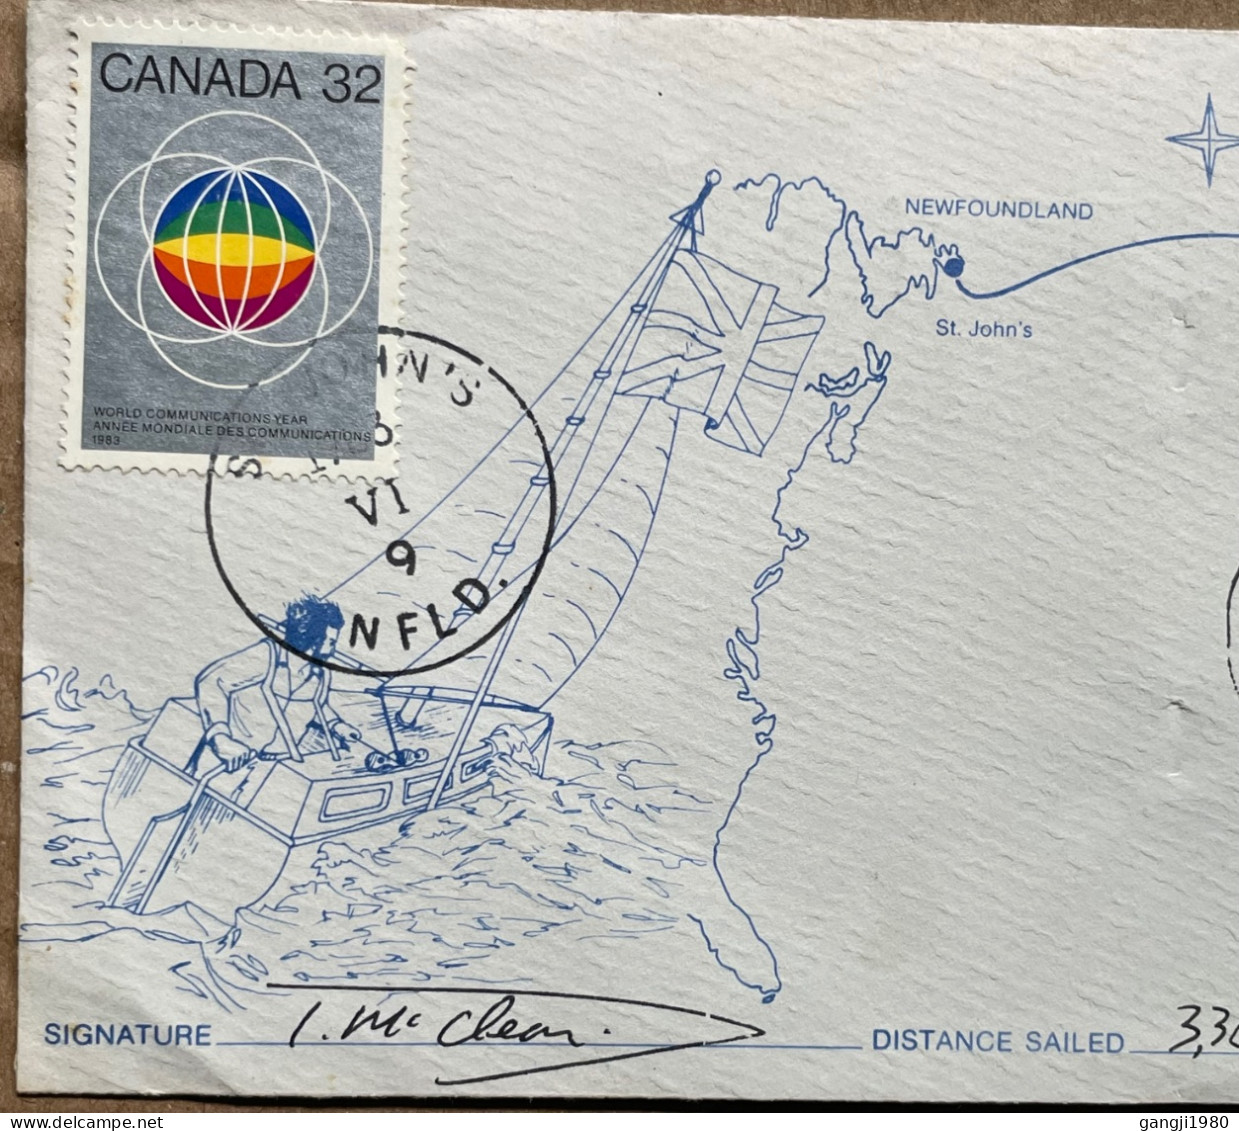 GB CANADA PORTUGAL 1983, COMBO COVER SIGNATURE TUM MC CLEAN, 33,60 MILE DISTANCE 62 DAYS SEA TOUR, ST.JOHN'S & PORTO CIT - Cartas & Documentos